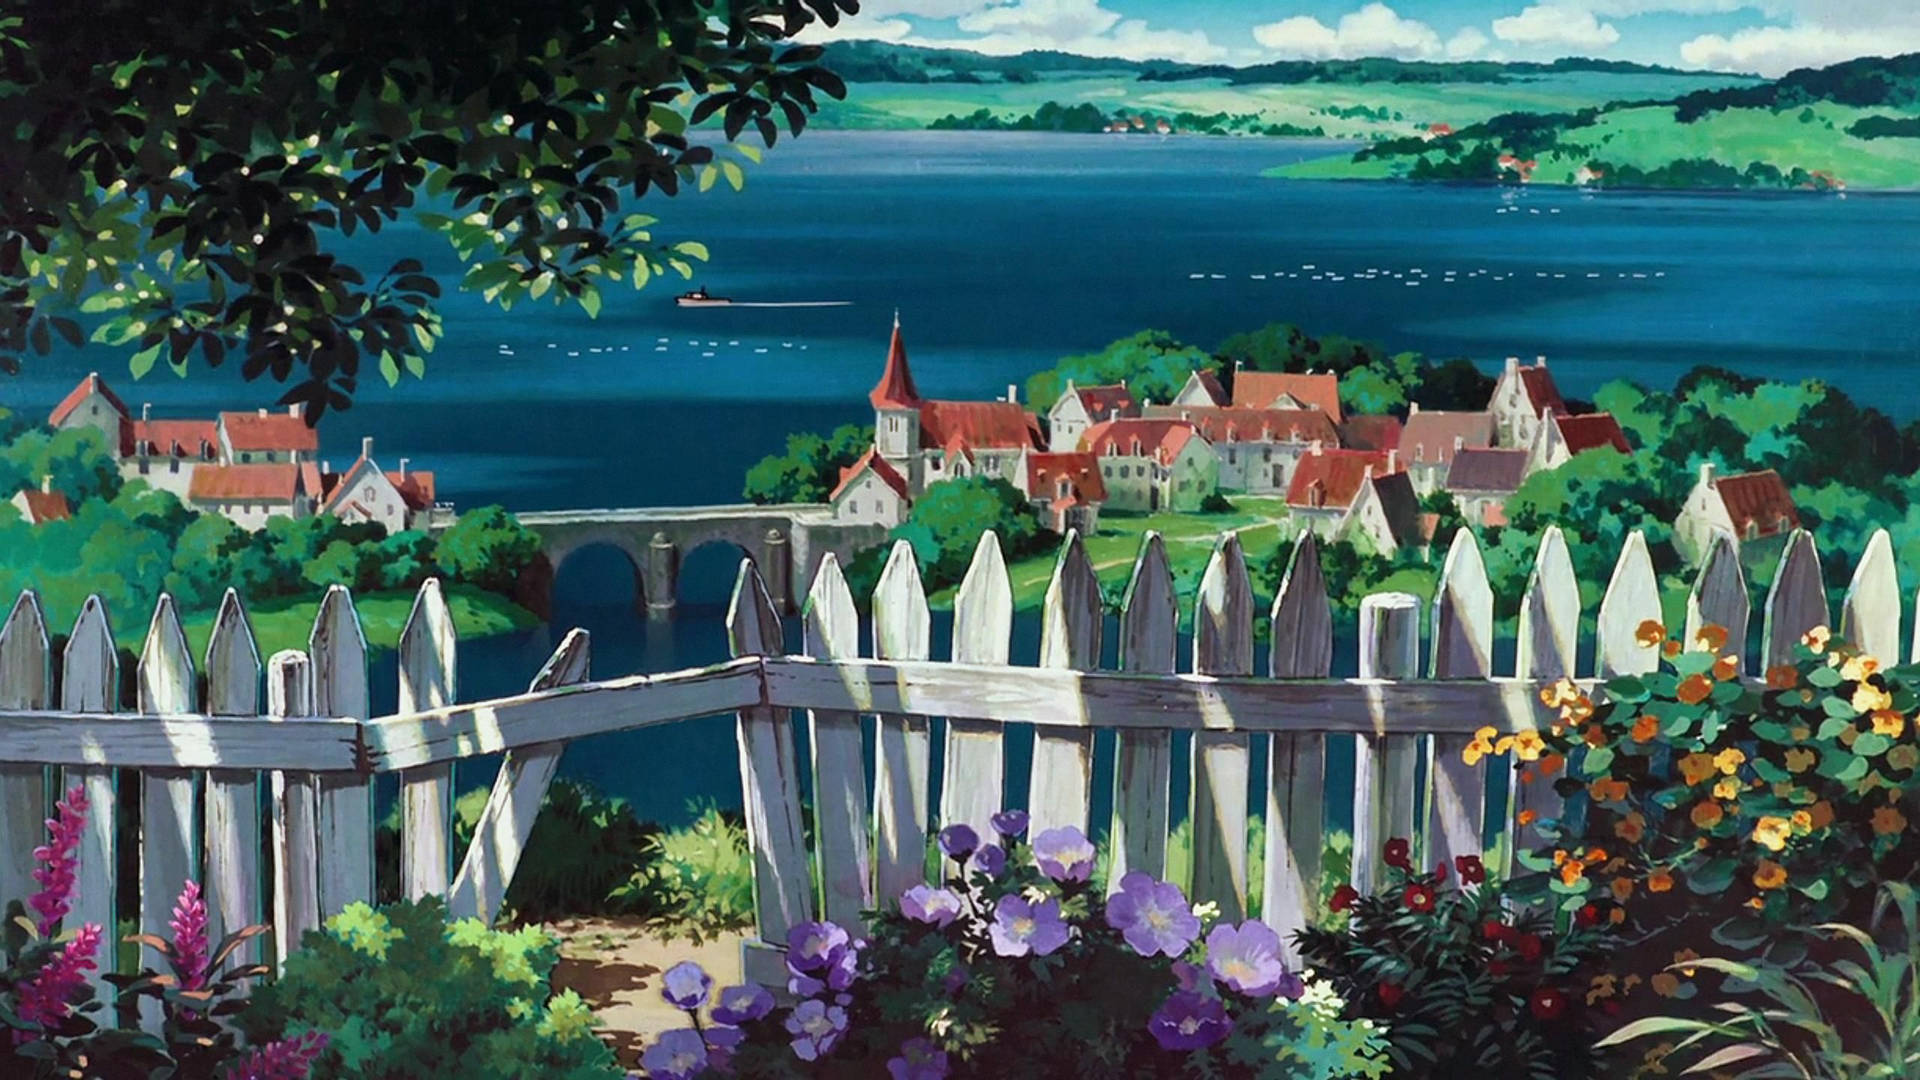 Studio Ghibli Kiki's Delivery Service Wallpaper